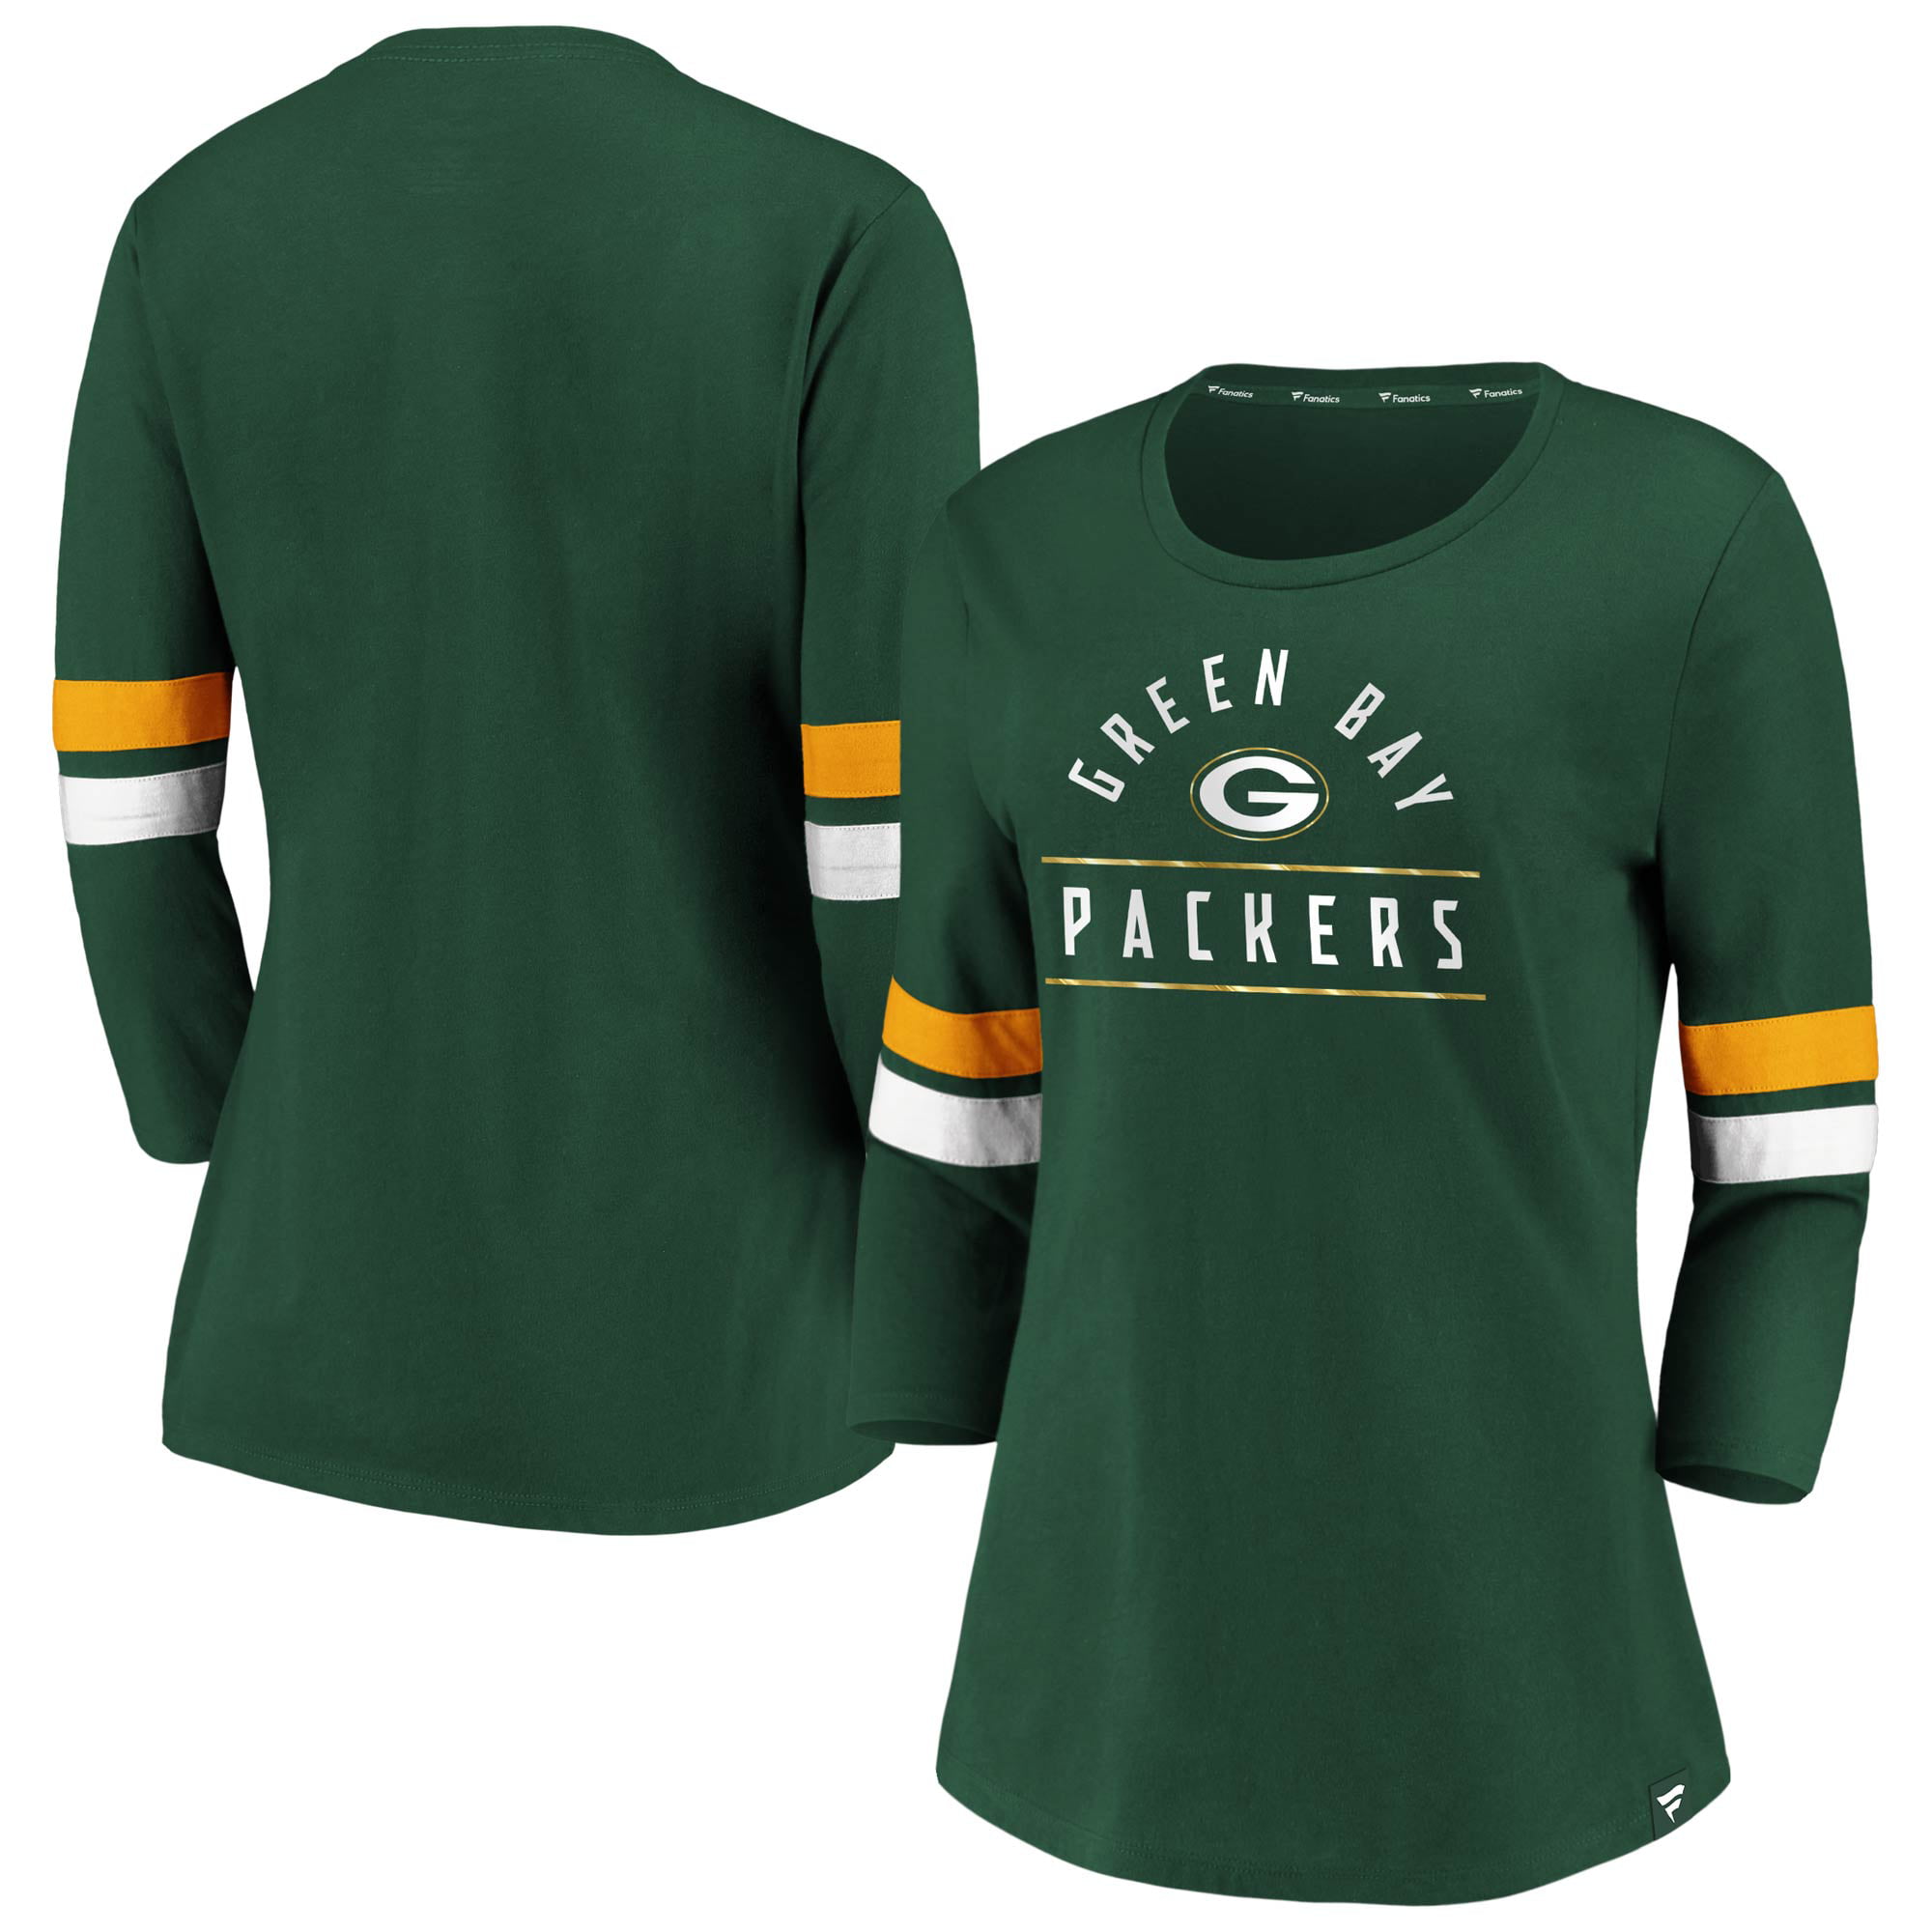 New Green Bay Packers T-Shirt Women's Fanatics Iconic Splatter Graphic T-Shirt 